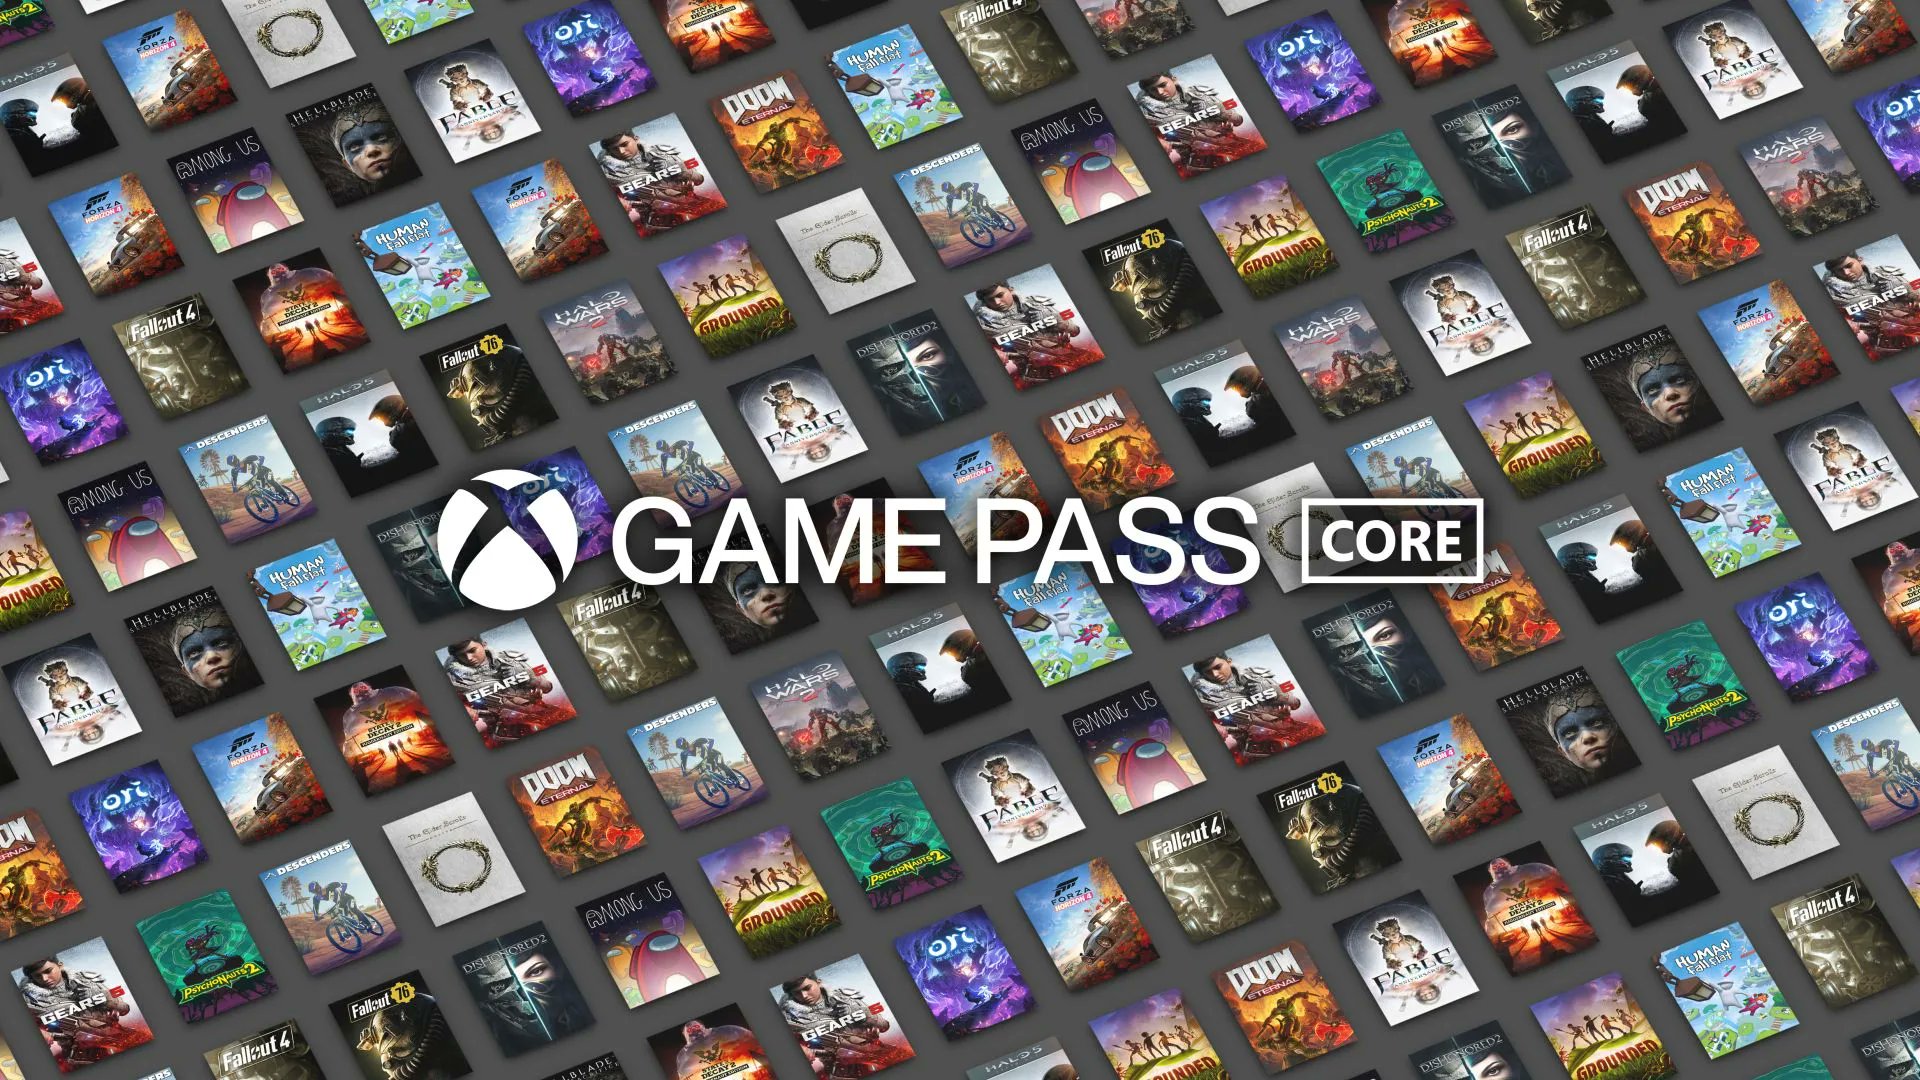 Xbox game pass core refund - Microsoft Community